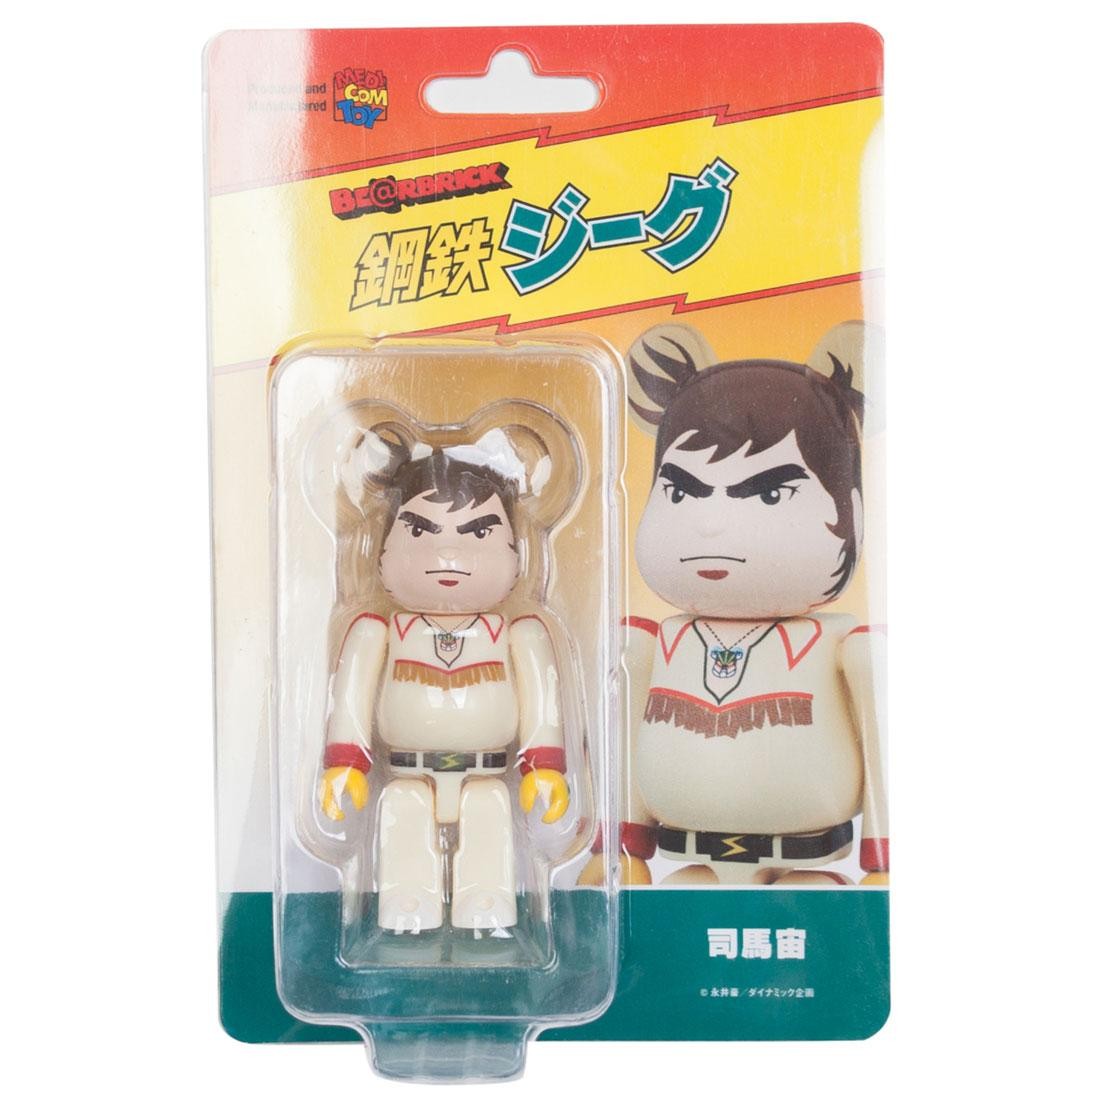 Medicom Shiba Hiroshi 100% Bearbrick Figure (white)